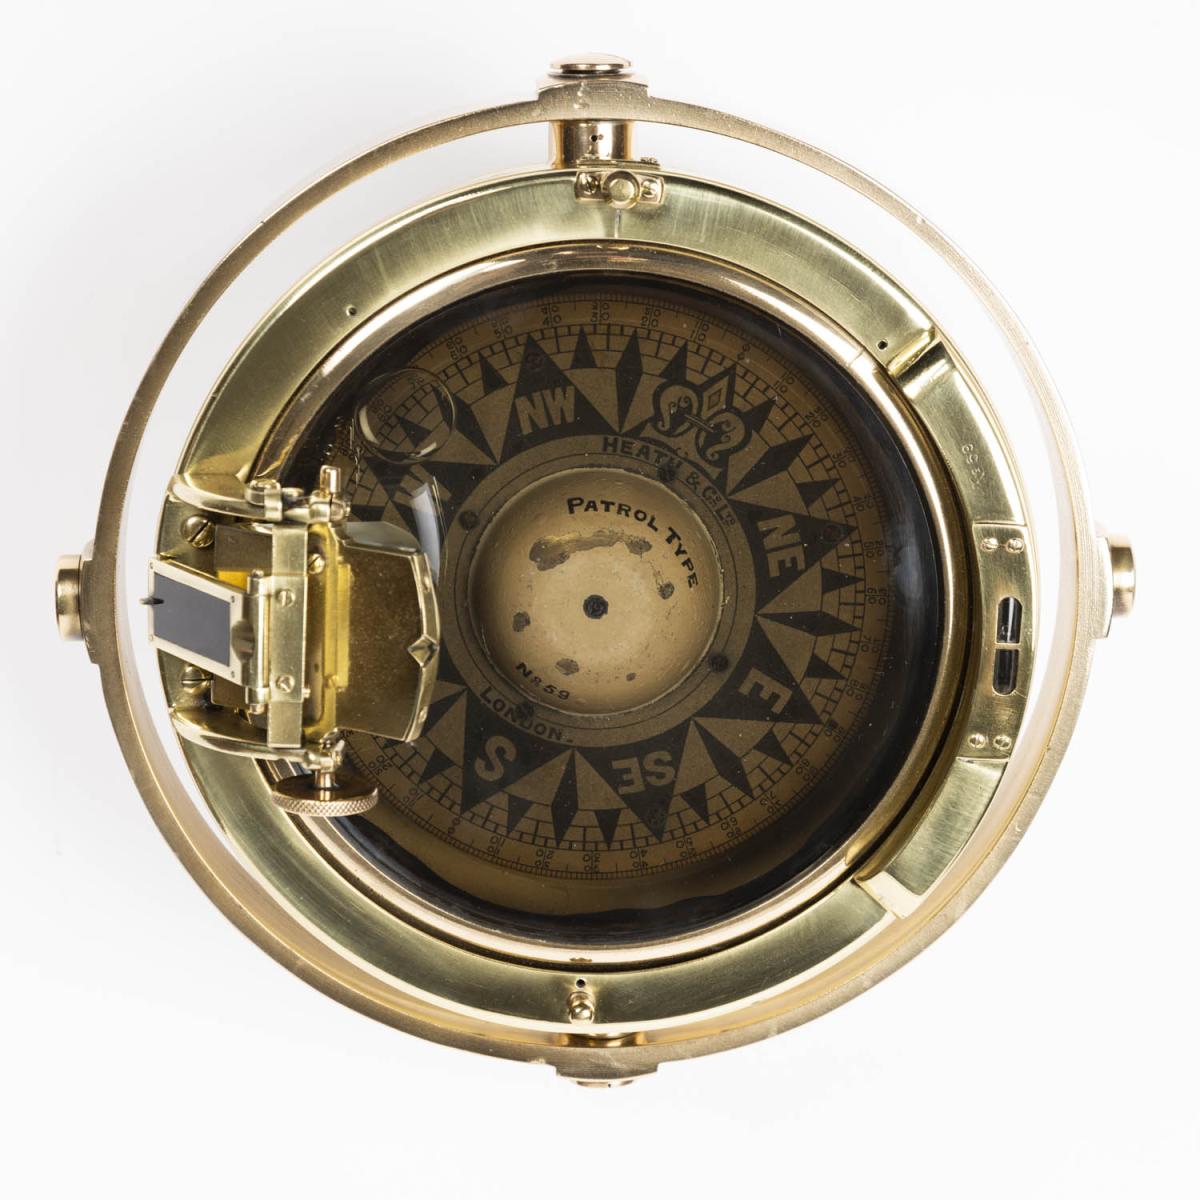 WWI era Patrol type ship’s wet card compass